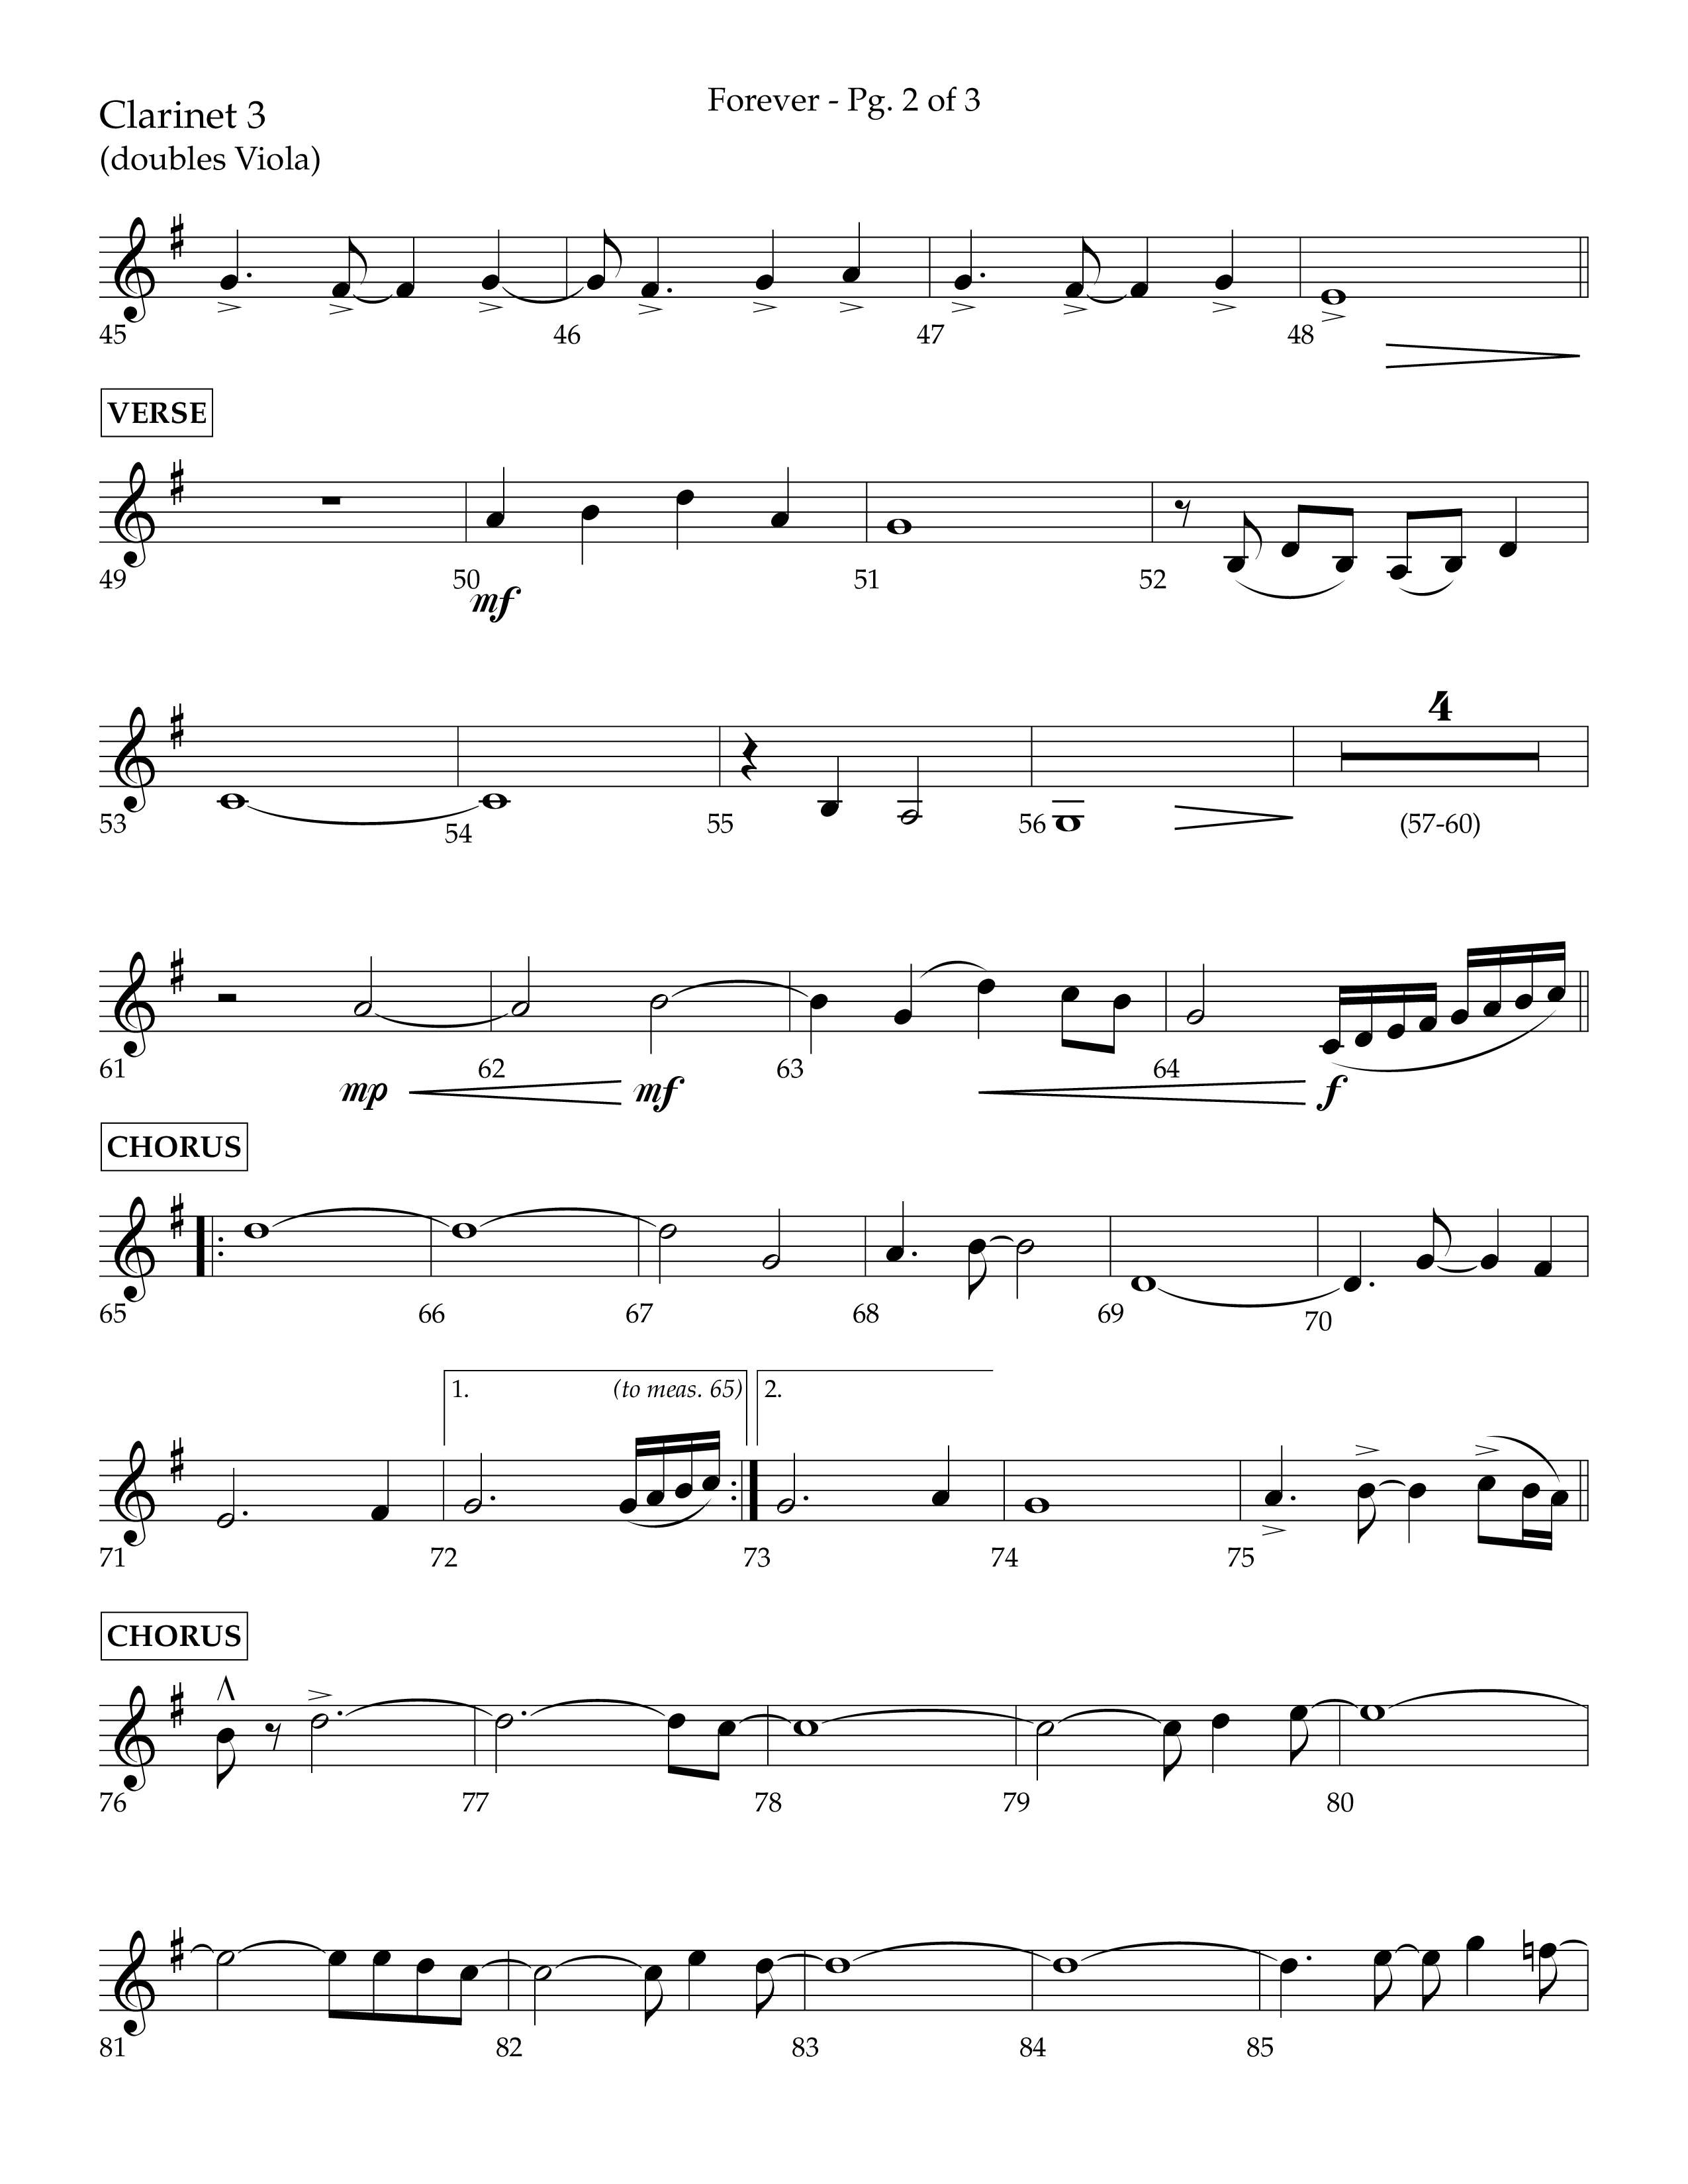 Forever (with Sing Praise) (Choral Anthem SATB) Clarinet 3 (Lifeway Choral / Arr. Danny Zaloudik)